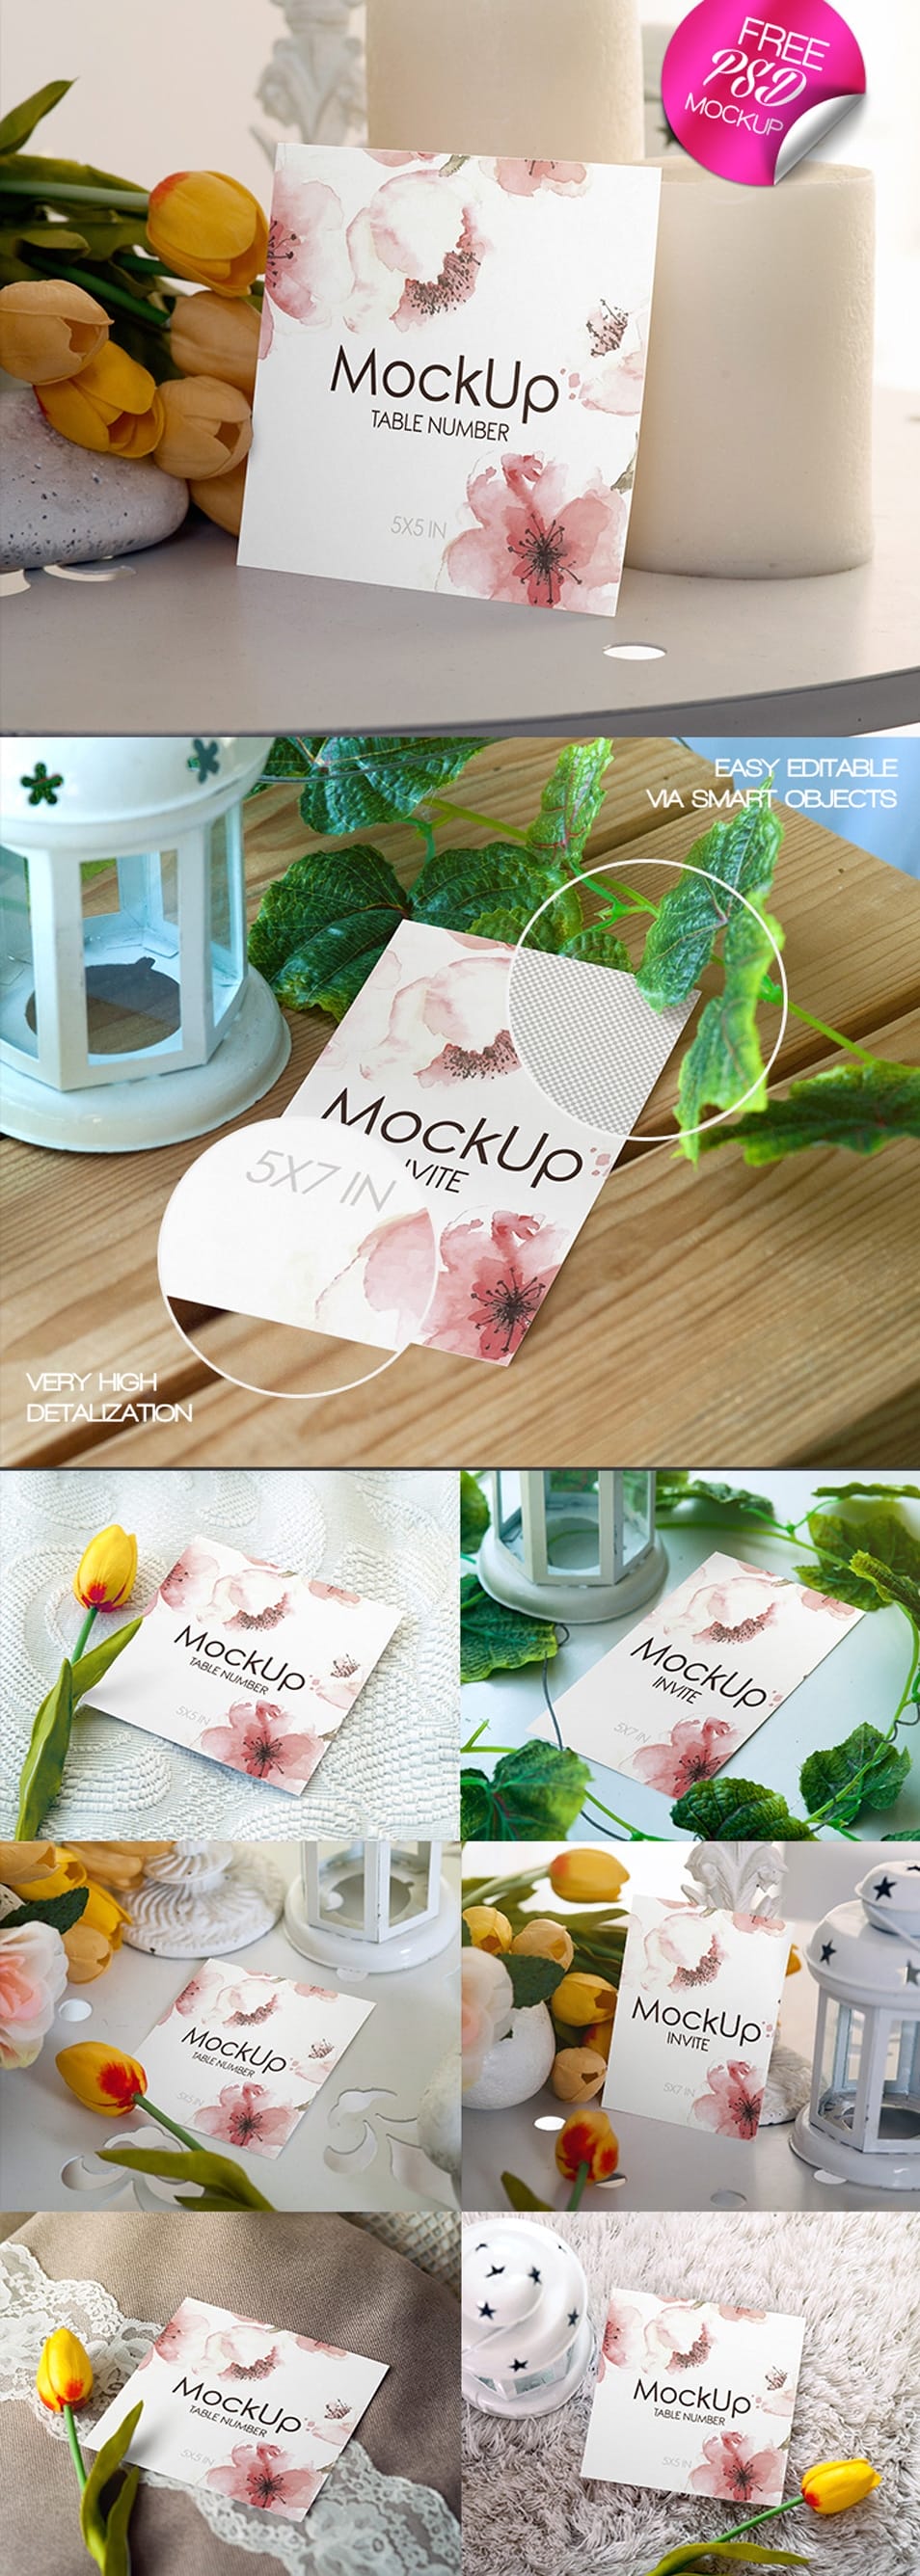 Free Wedding Invitation and Card Mockups Set